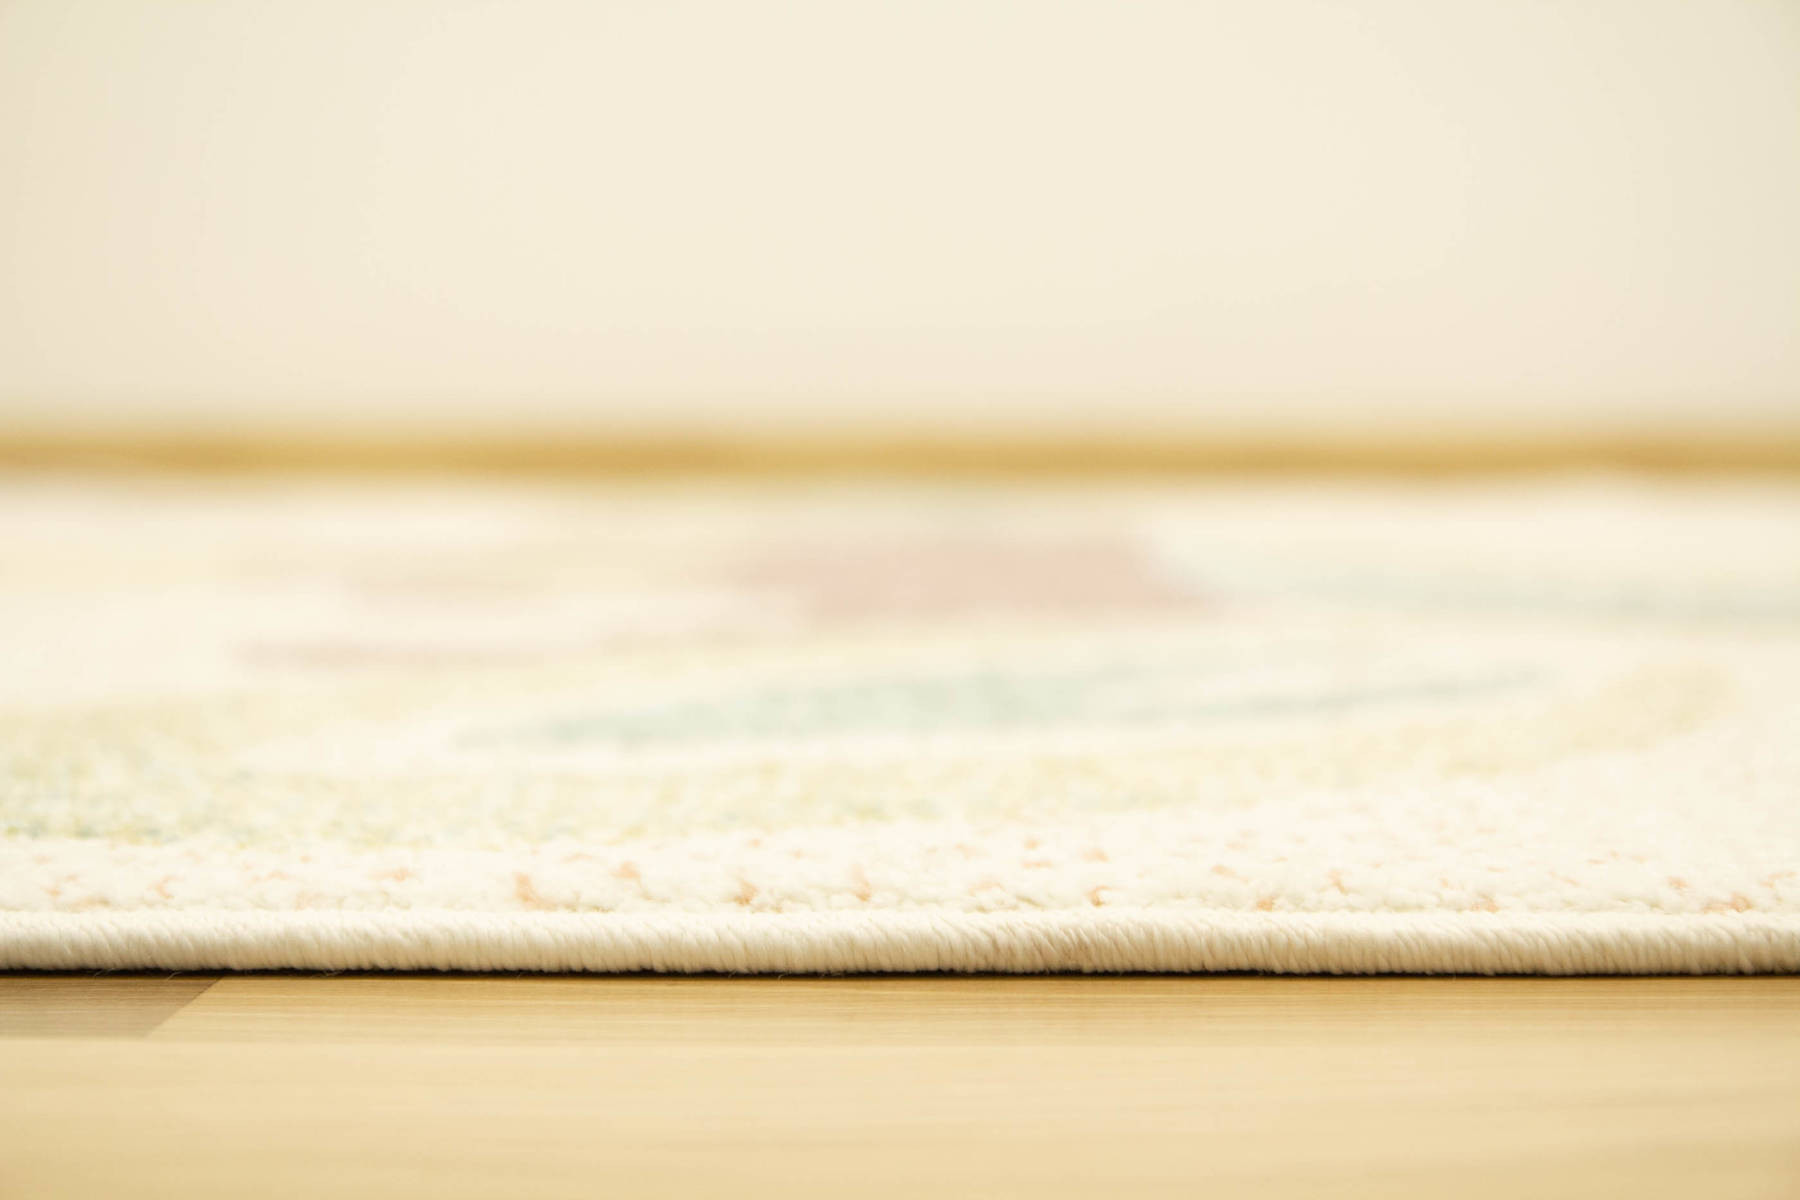 Dětský koberec Lima B070A krémový / růžový